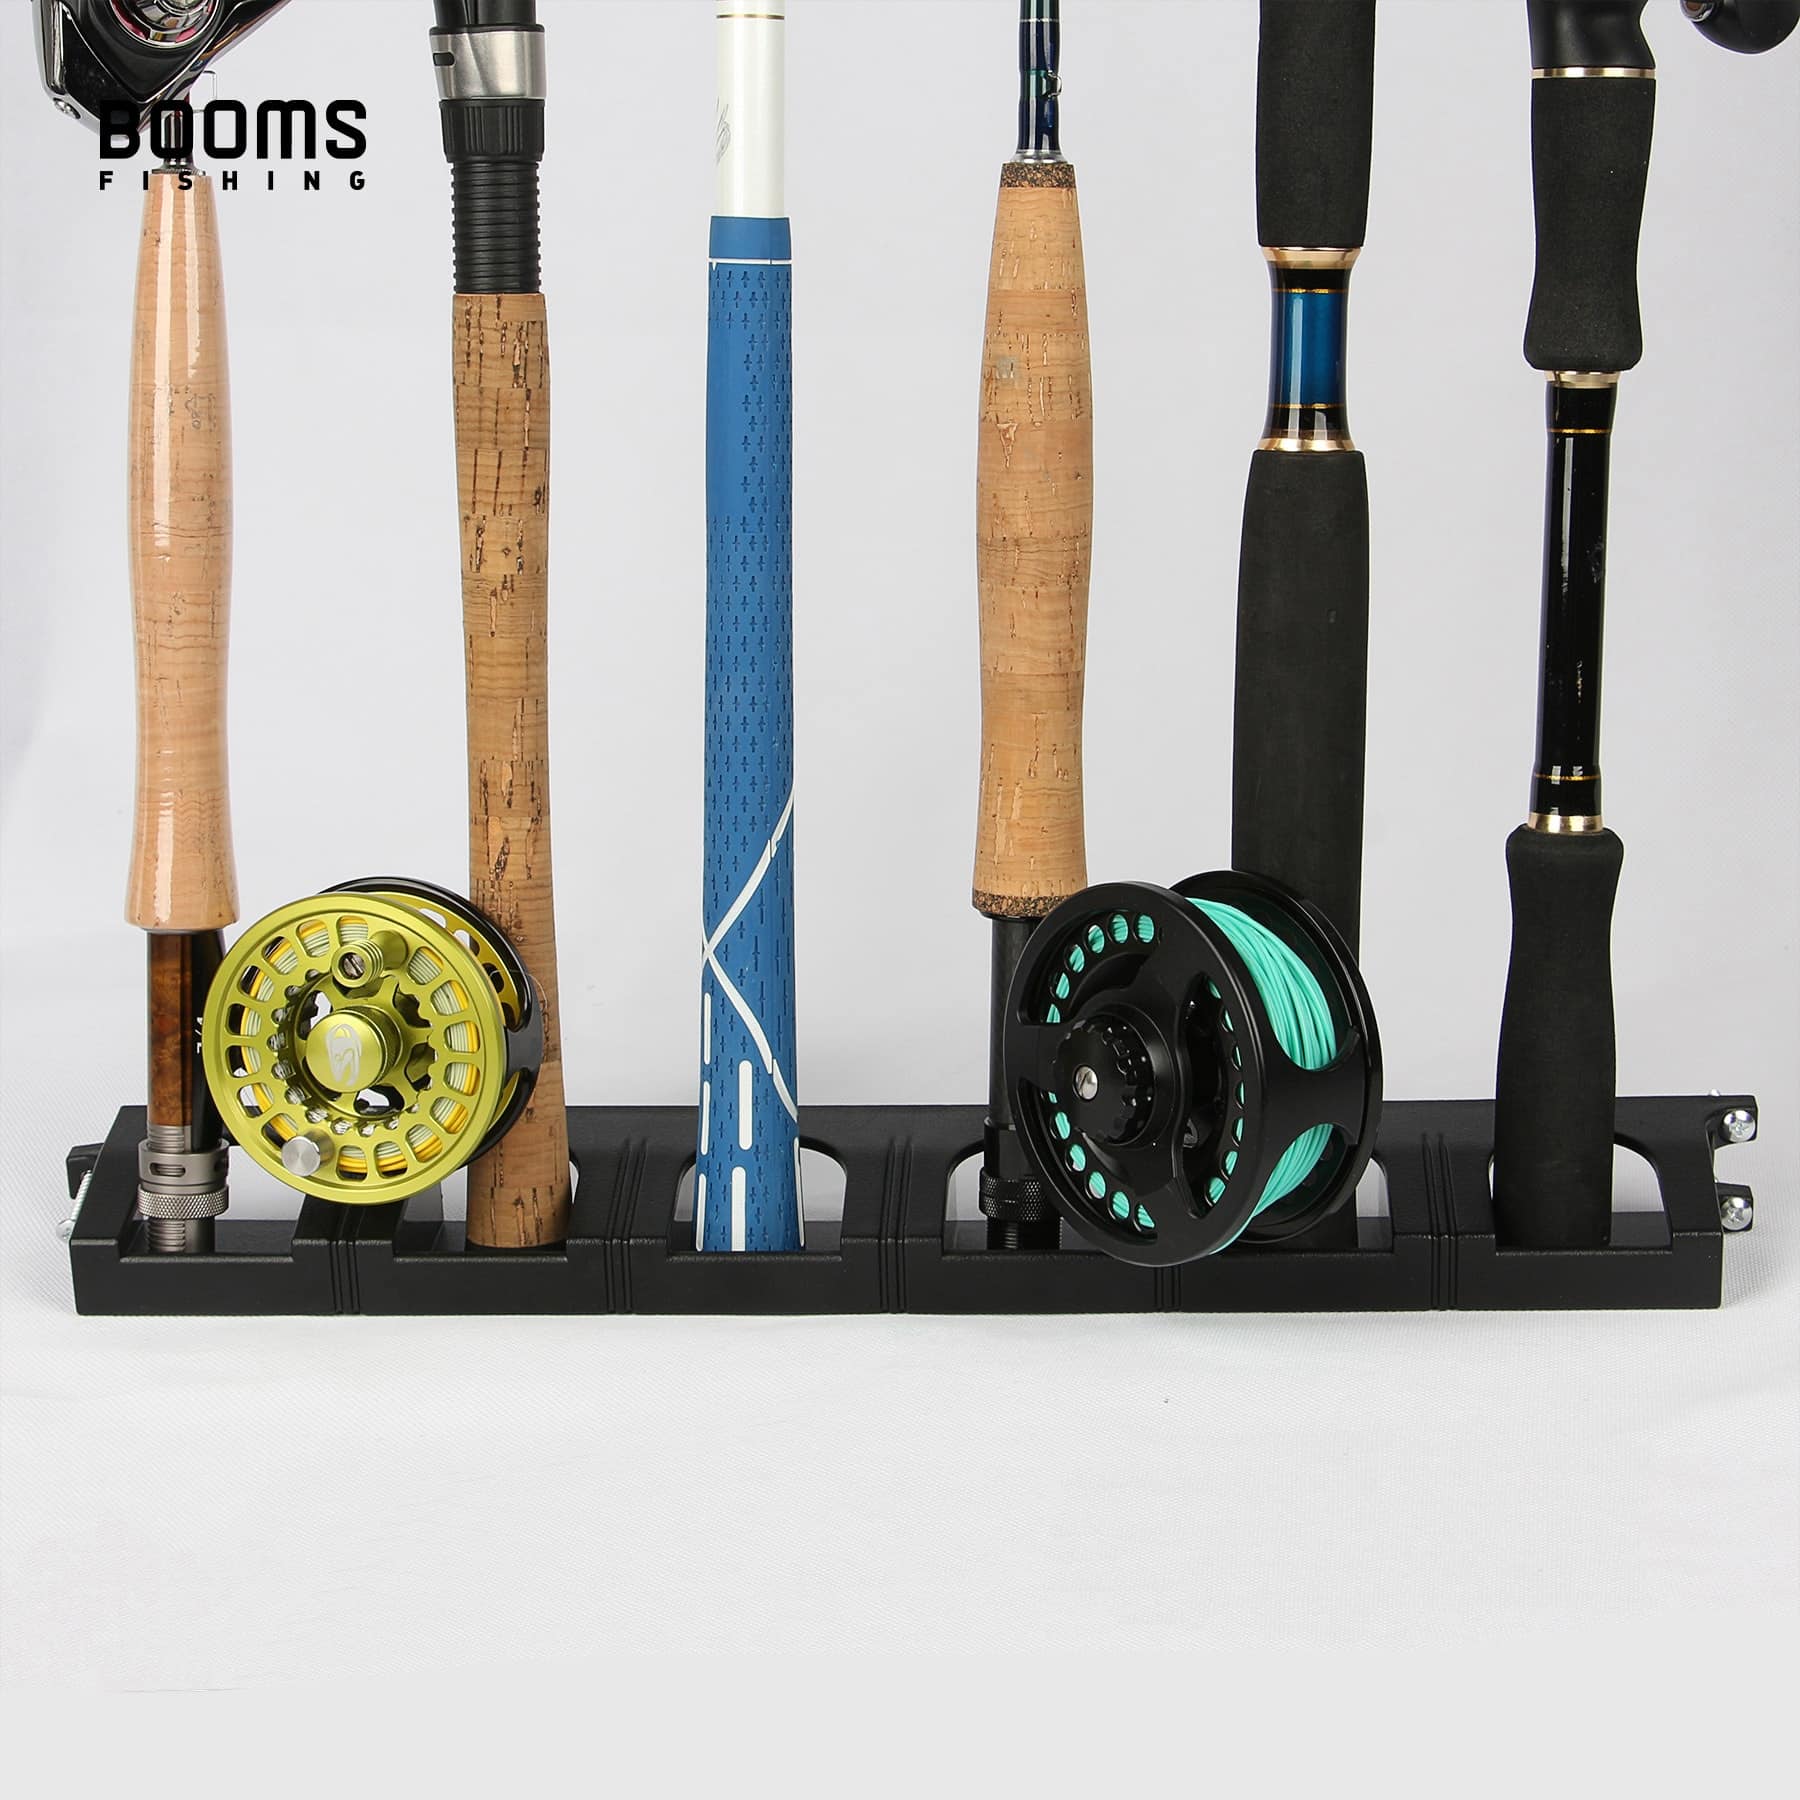 Booms Fishing WV1 Vertical 6-Rod Rack Fishing Pole Holder Wall Mount Modular for Garage